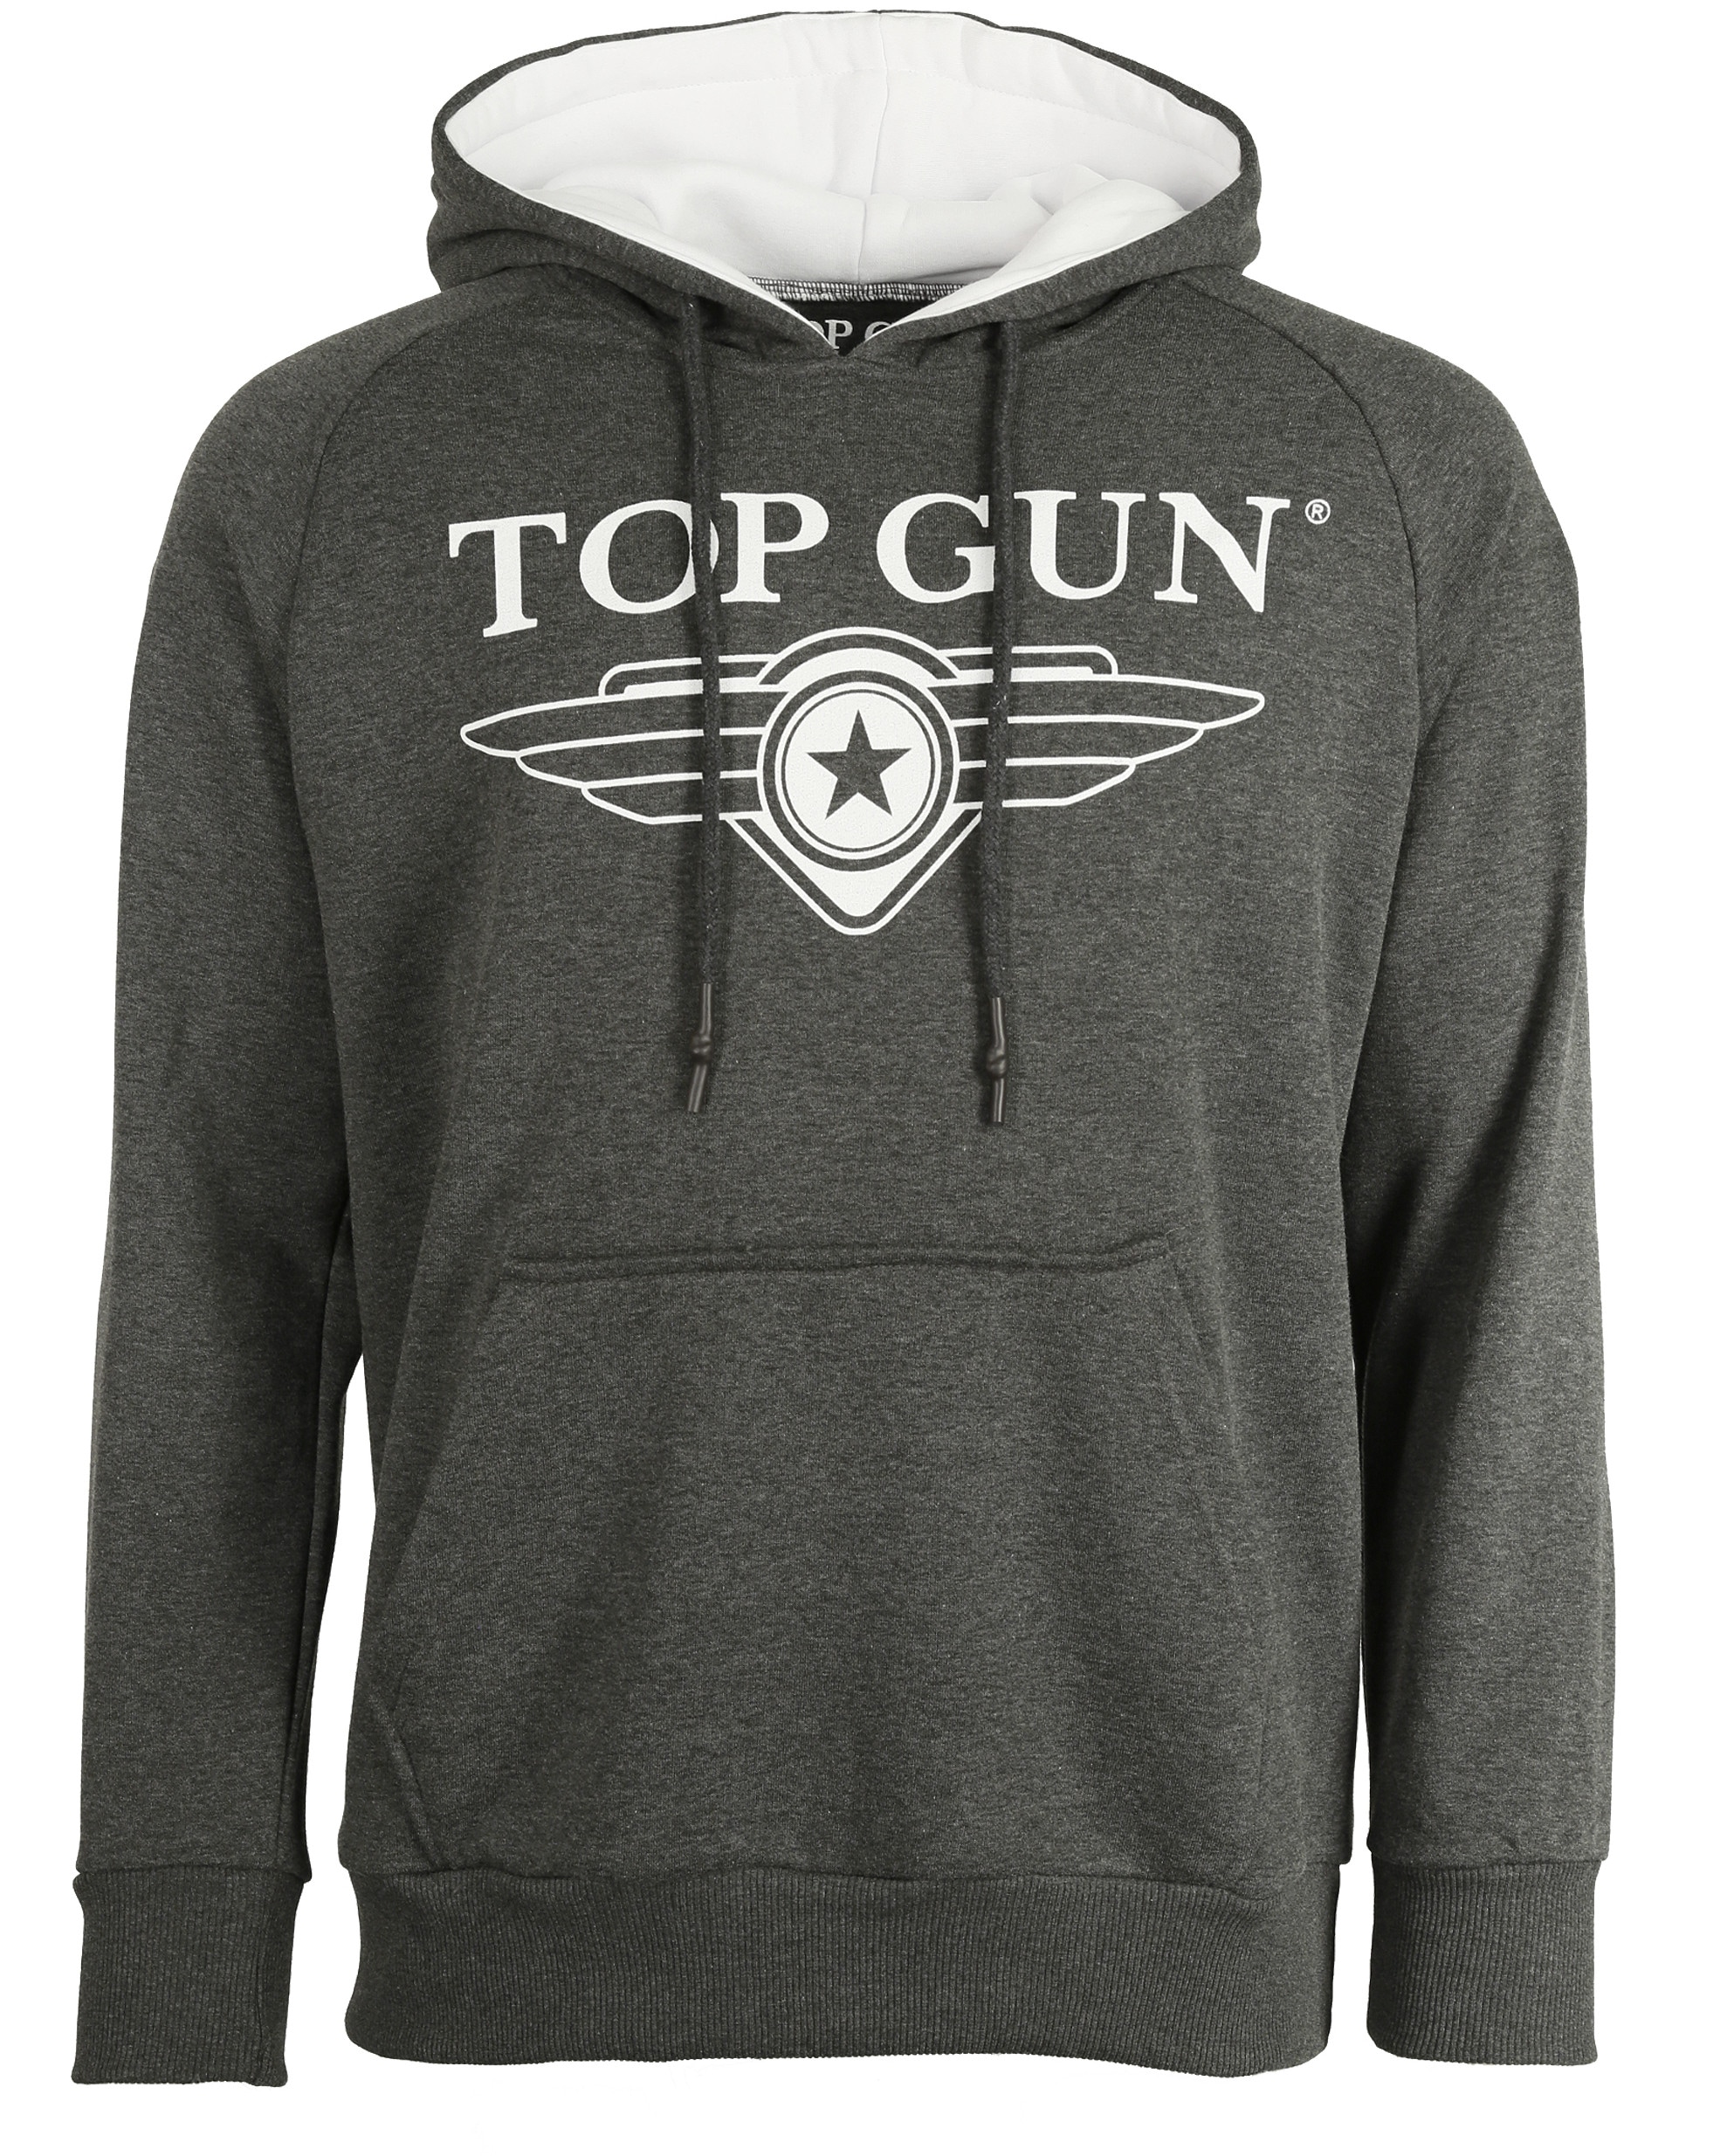 shoppen online »Hoodie bei Kapuzenpullover TG20201043« TOP OTTO GUN